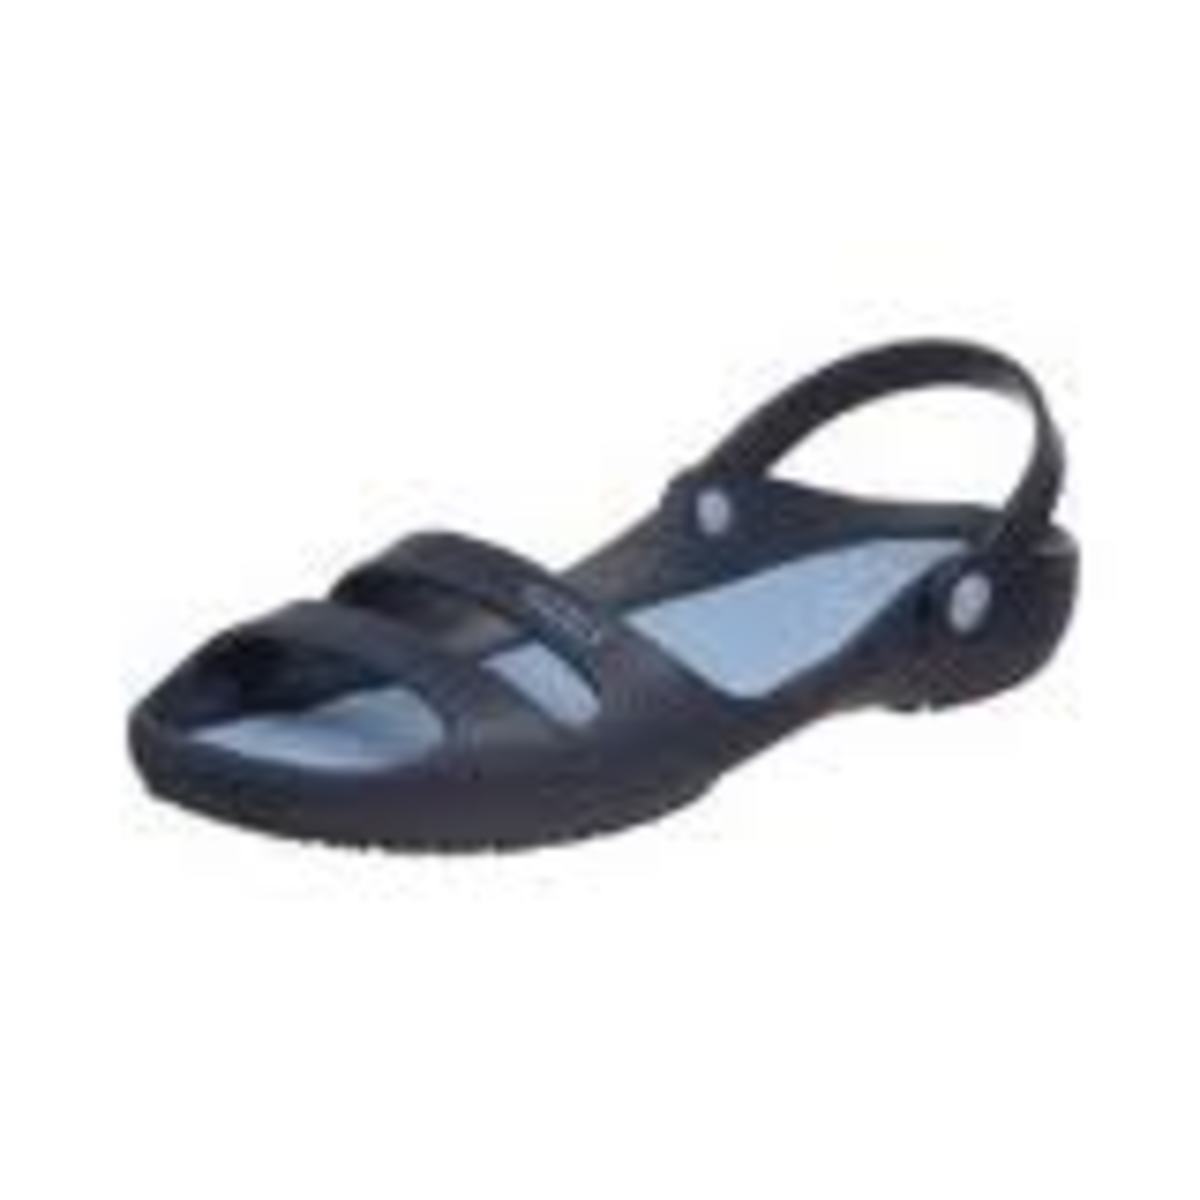 Black Womens Croc Sandals - Croct Sandala Small Feet Buy Online and Save Amazoncrock